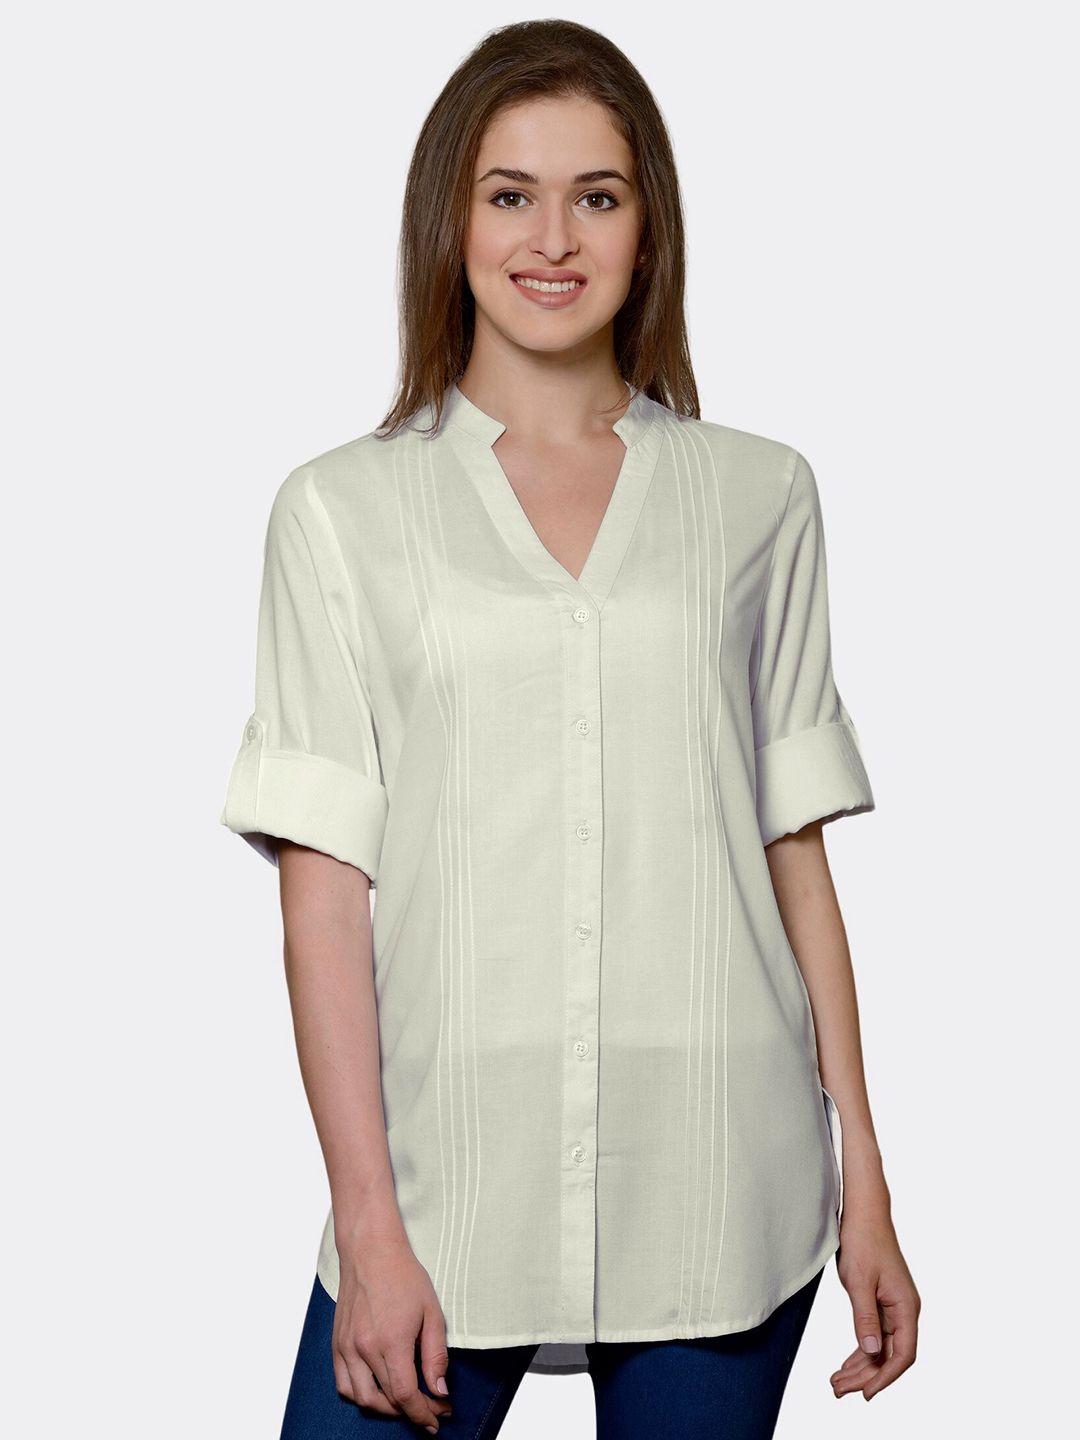 patrorna-women-off-white-comfort-casual-shirt